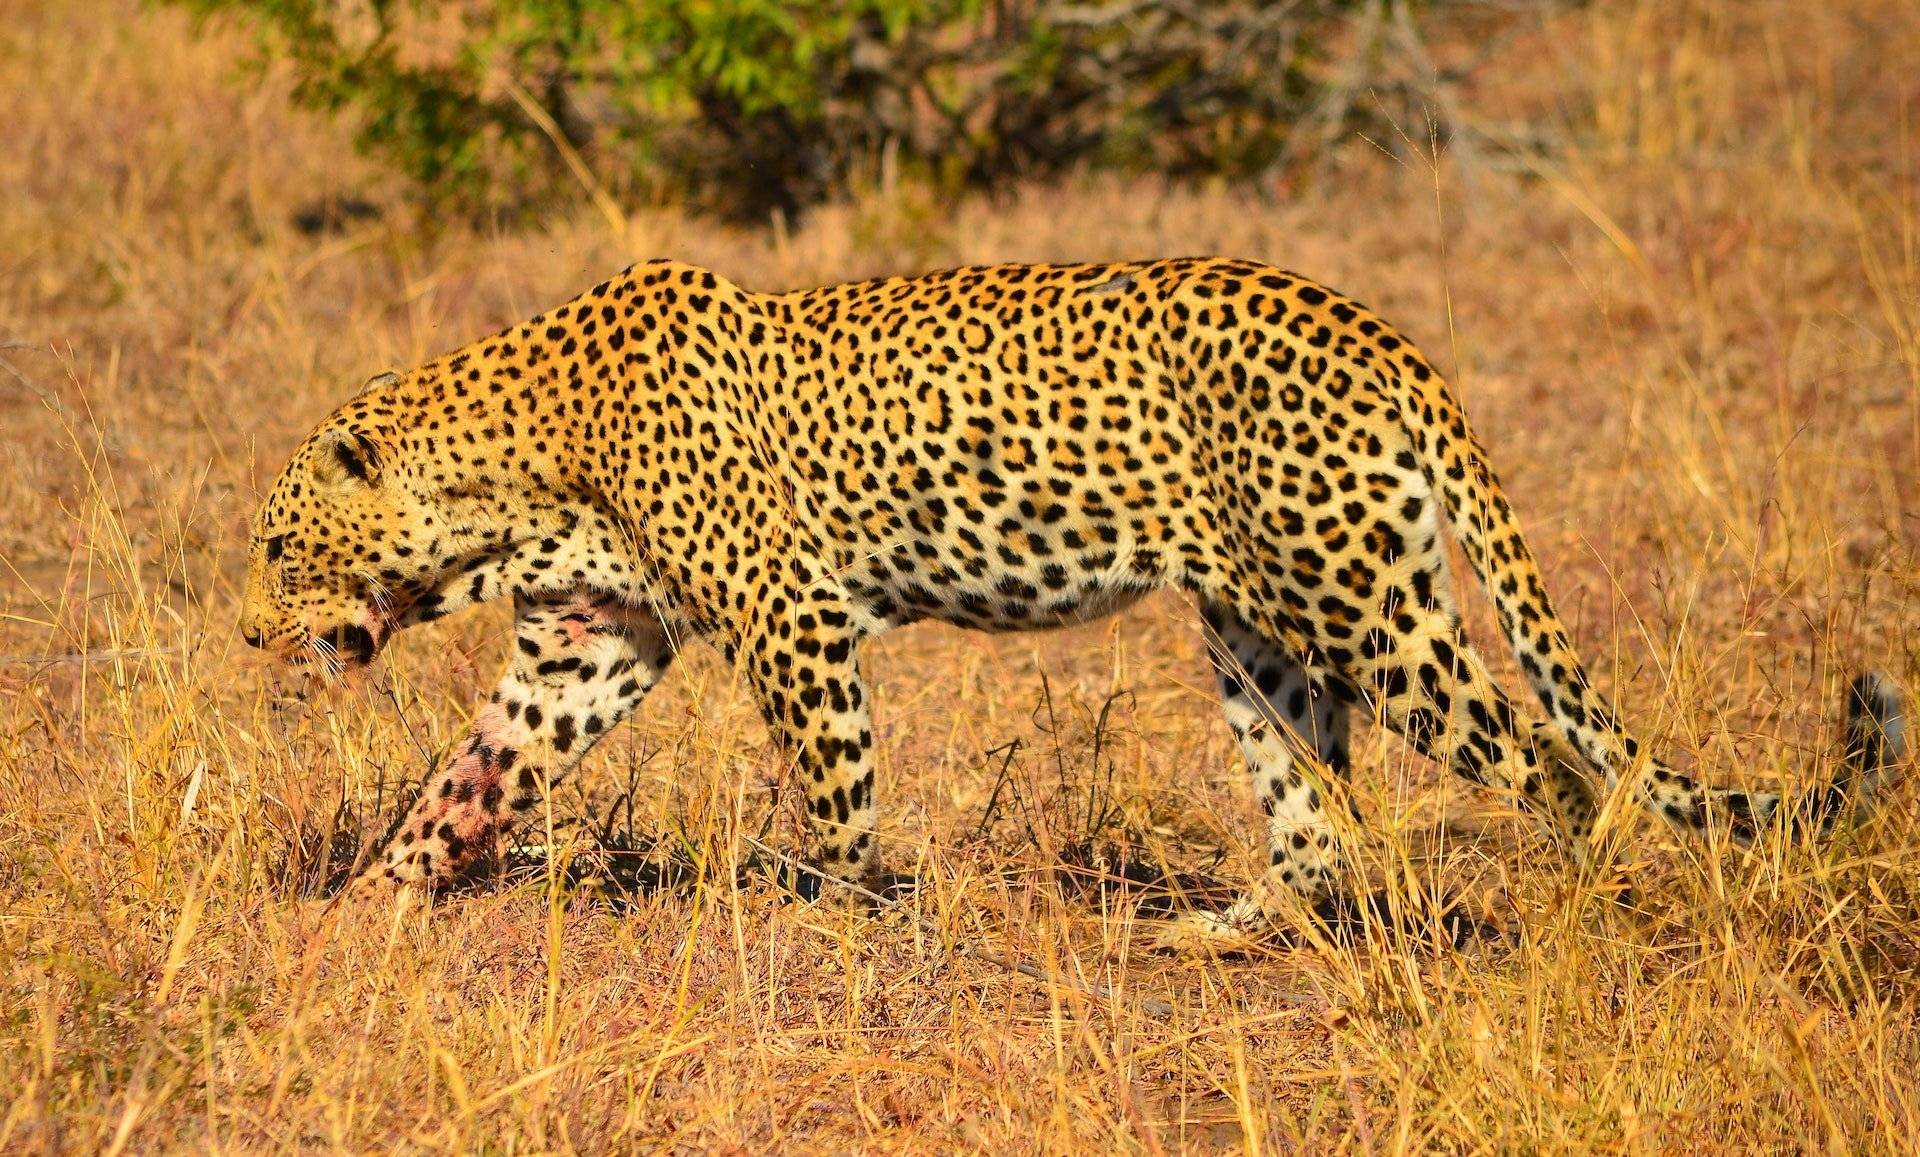 Jirafas, leopardos y otros mamíferos de Samburu